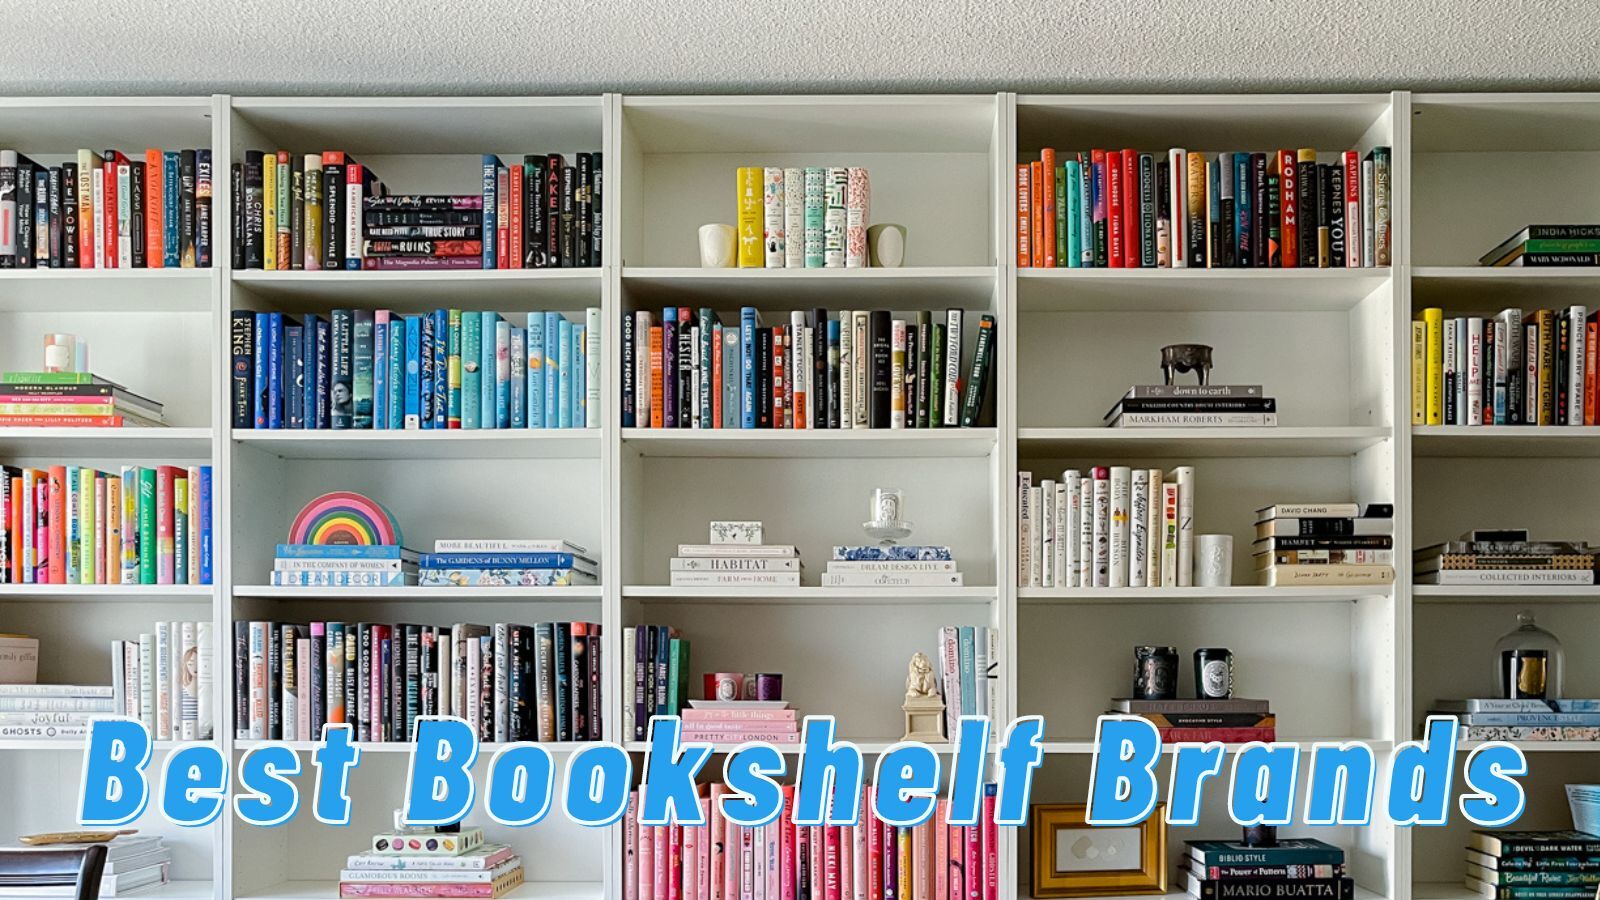 12 Best Bookshelf Brands for Storage and Display